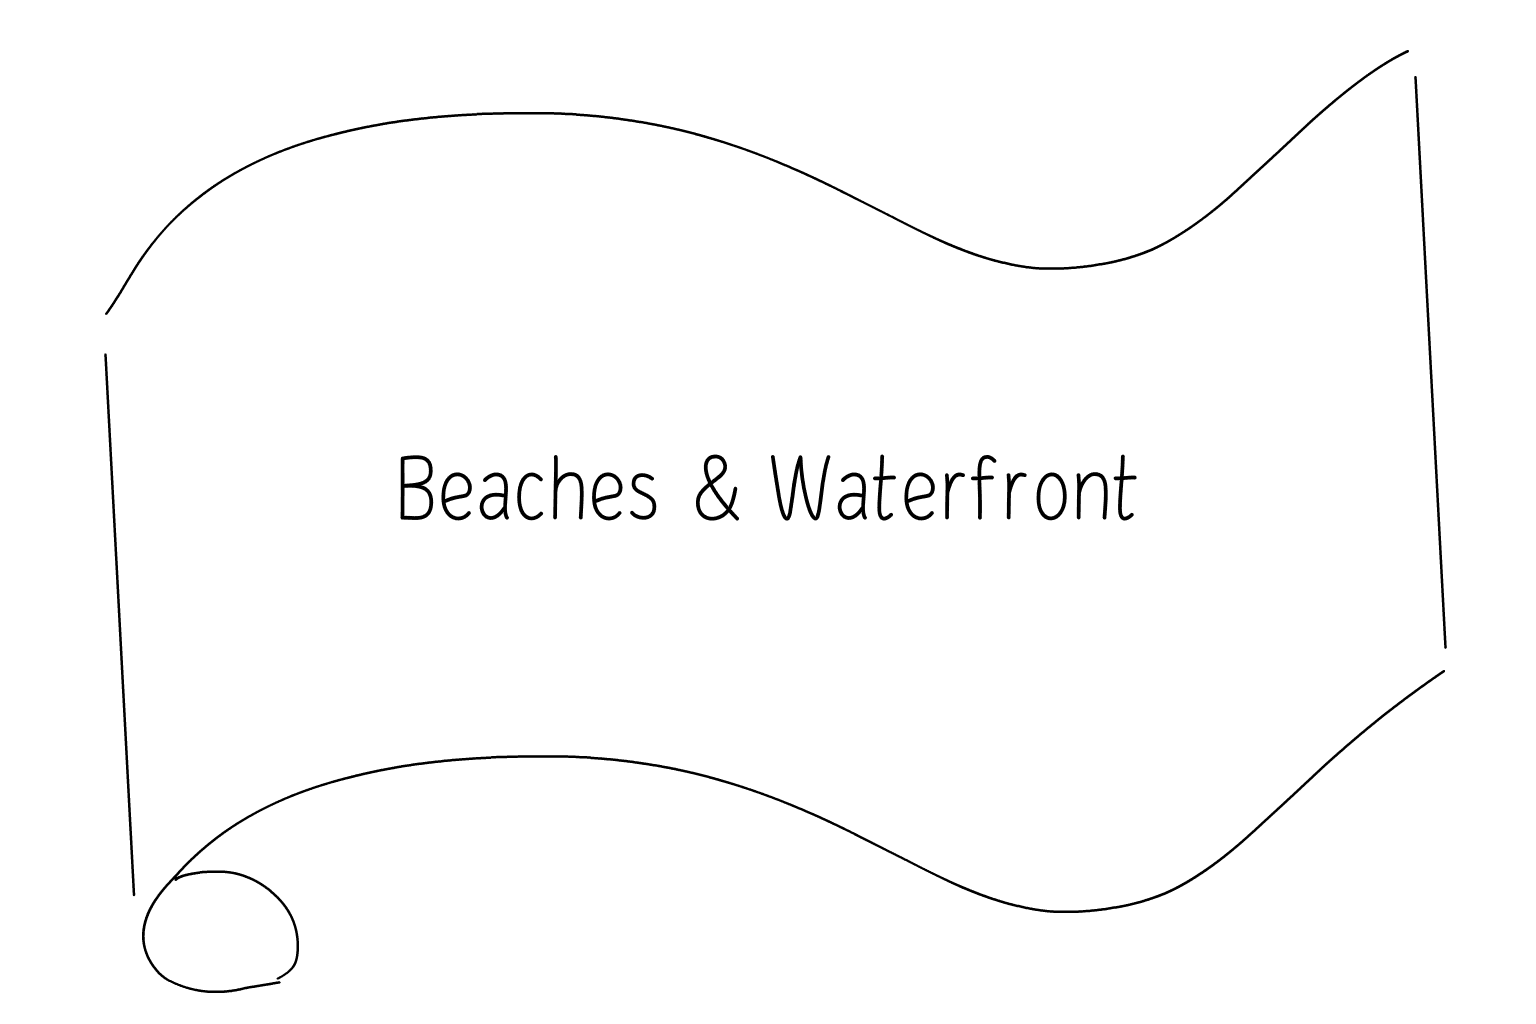 Illustration of wedding beach & waterfront venue